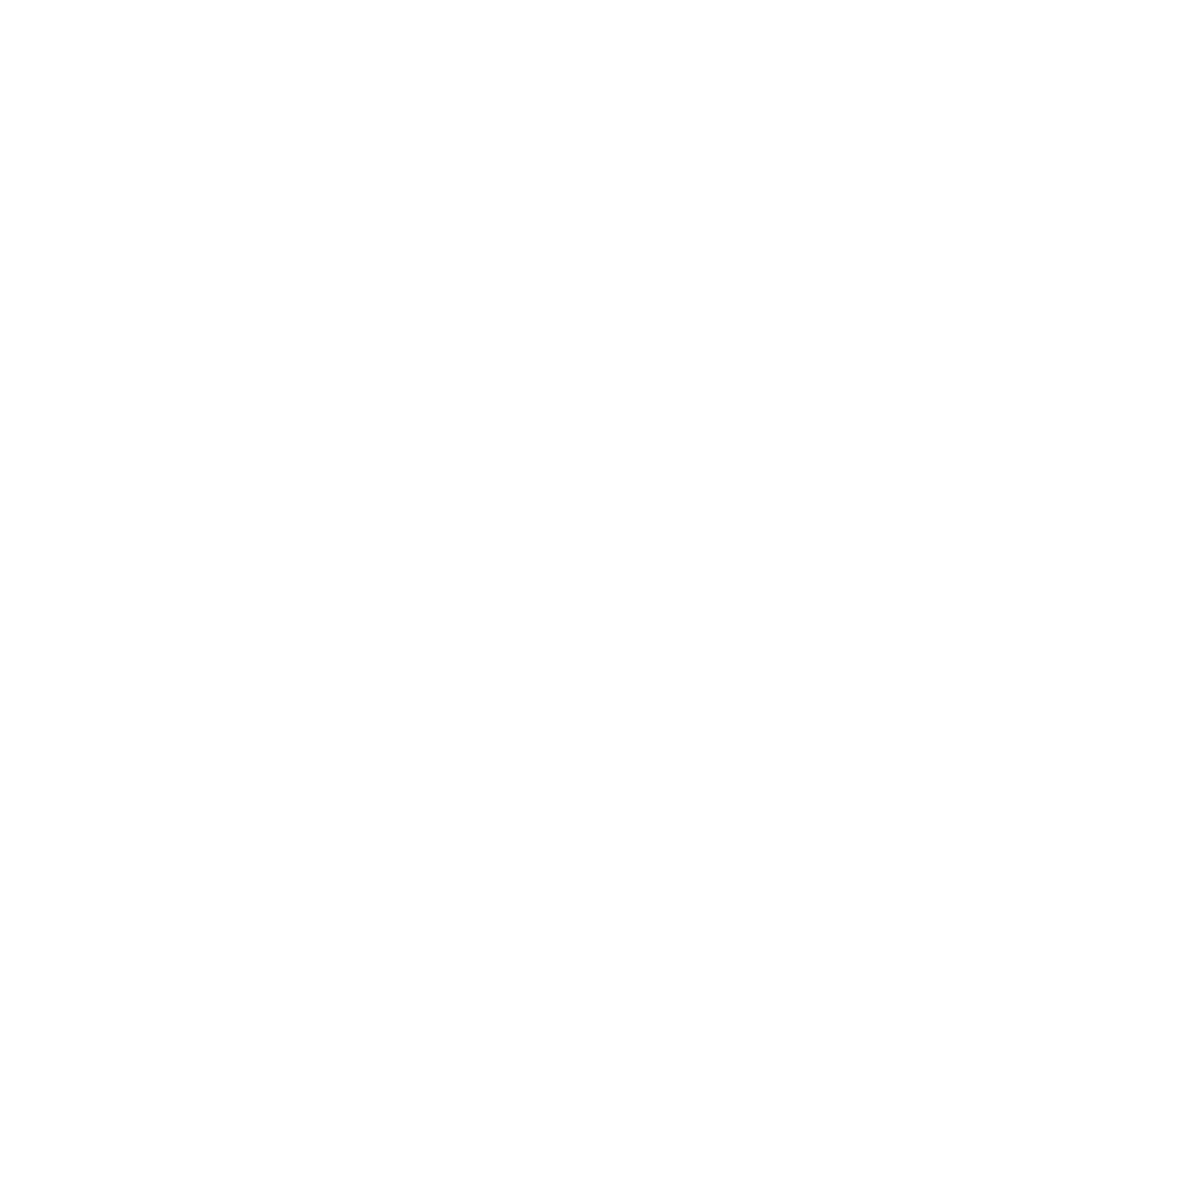 Brighton Food Bank